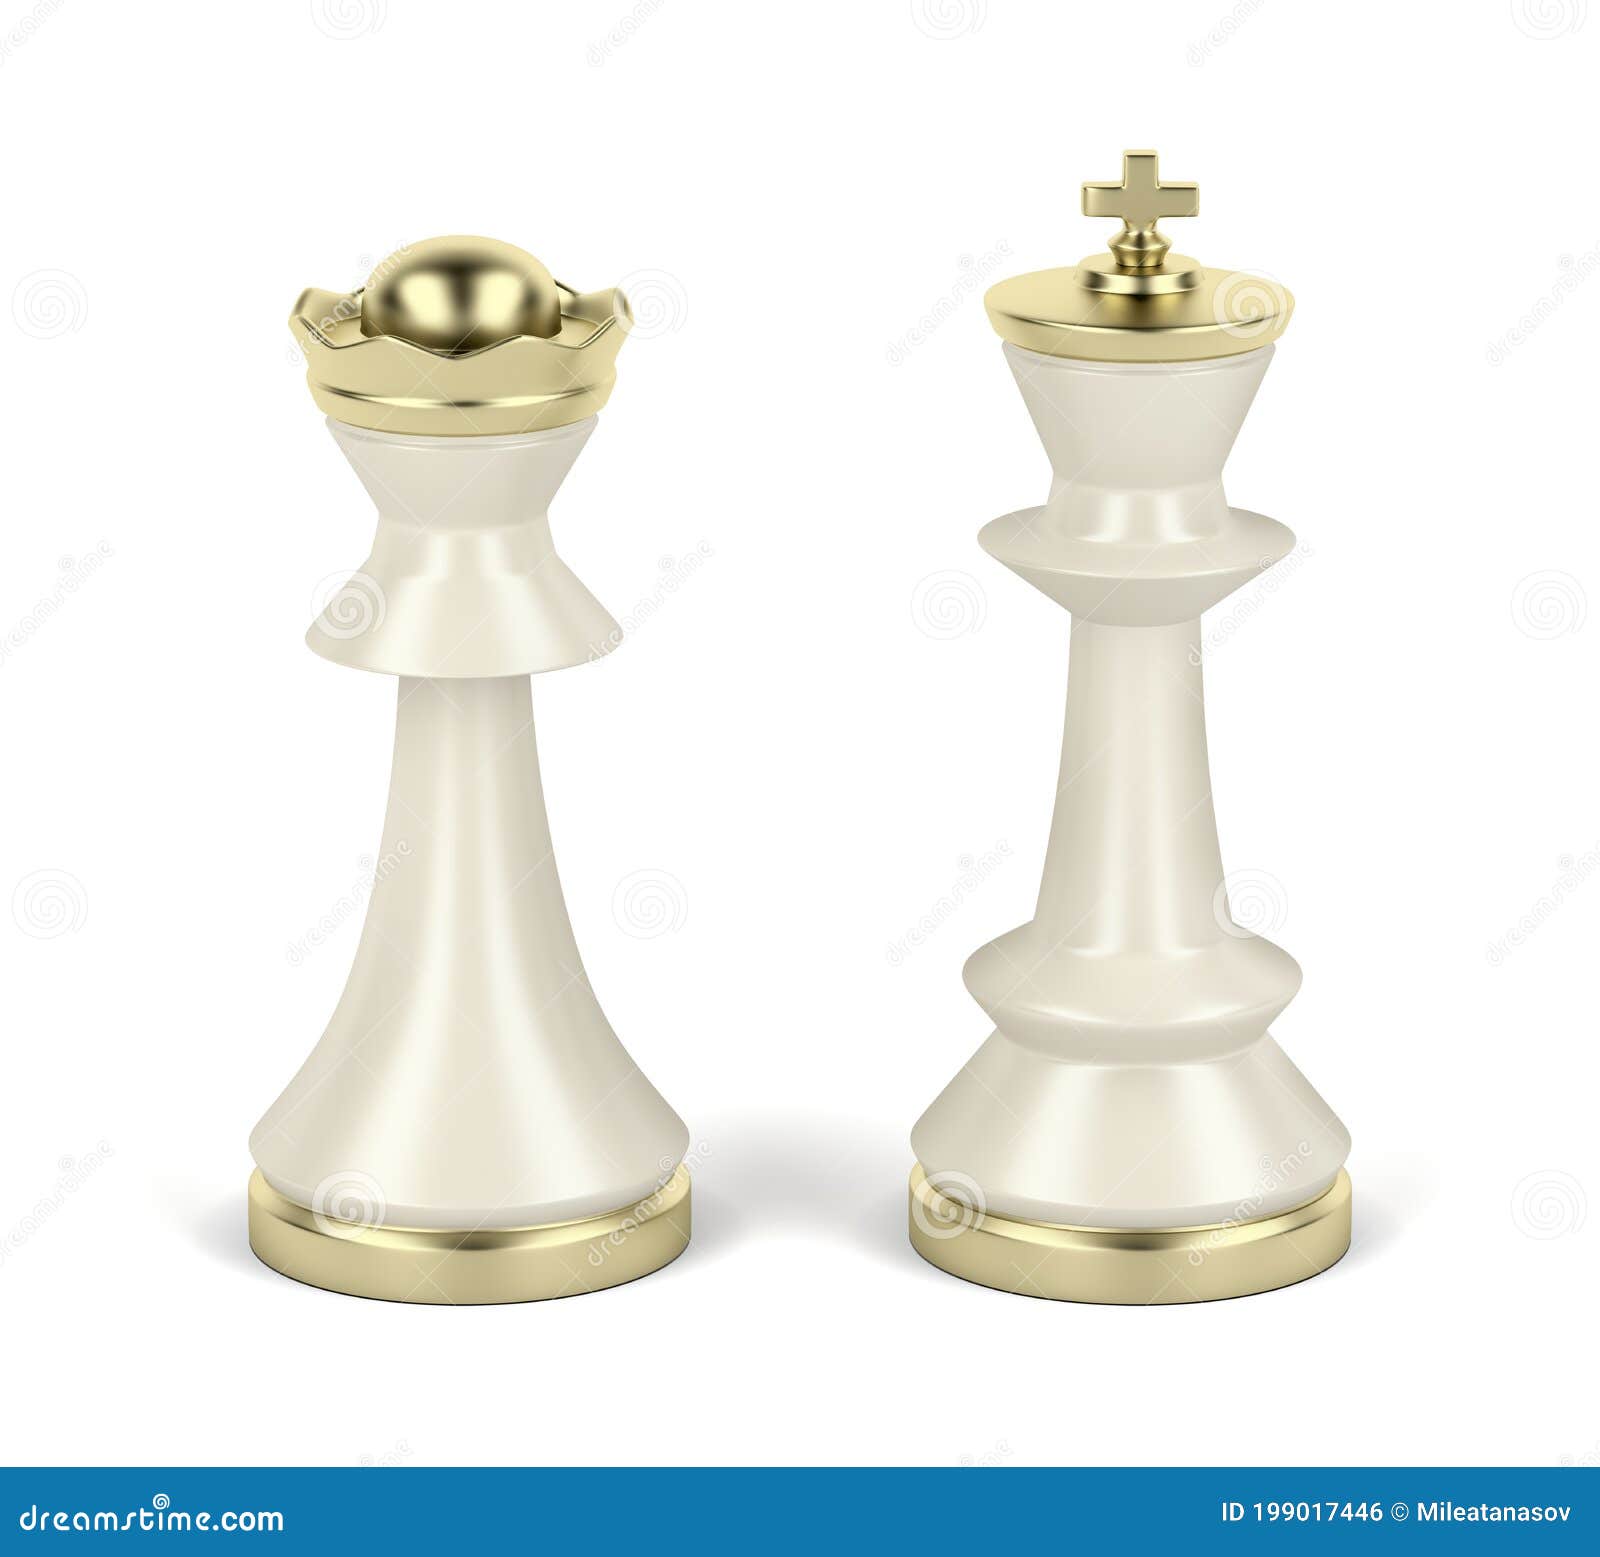 Peça de xadrez Queen Portable Network Graphics, xadrez, xadrez